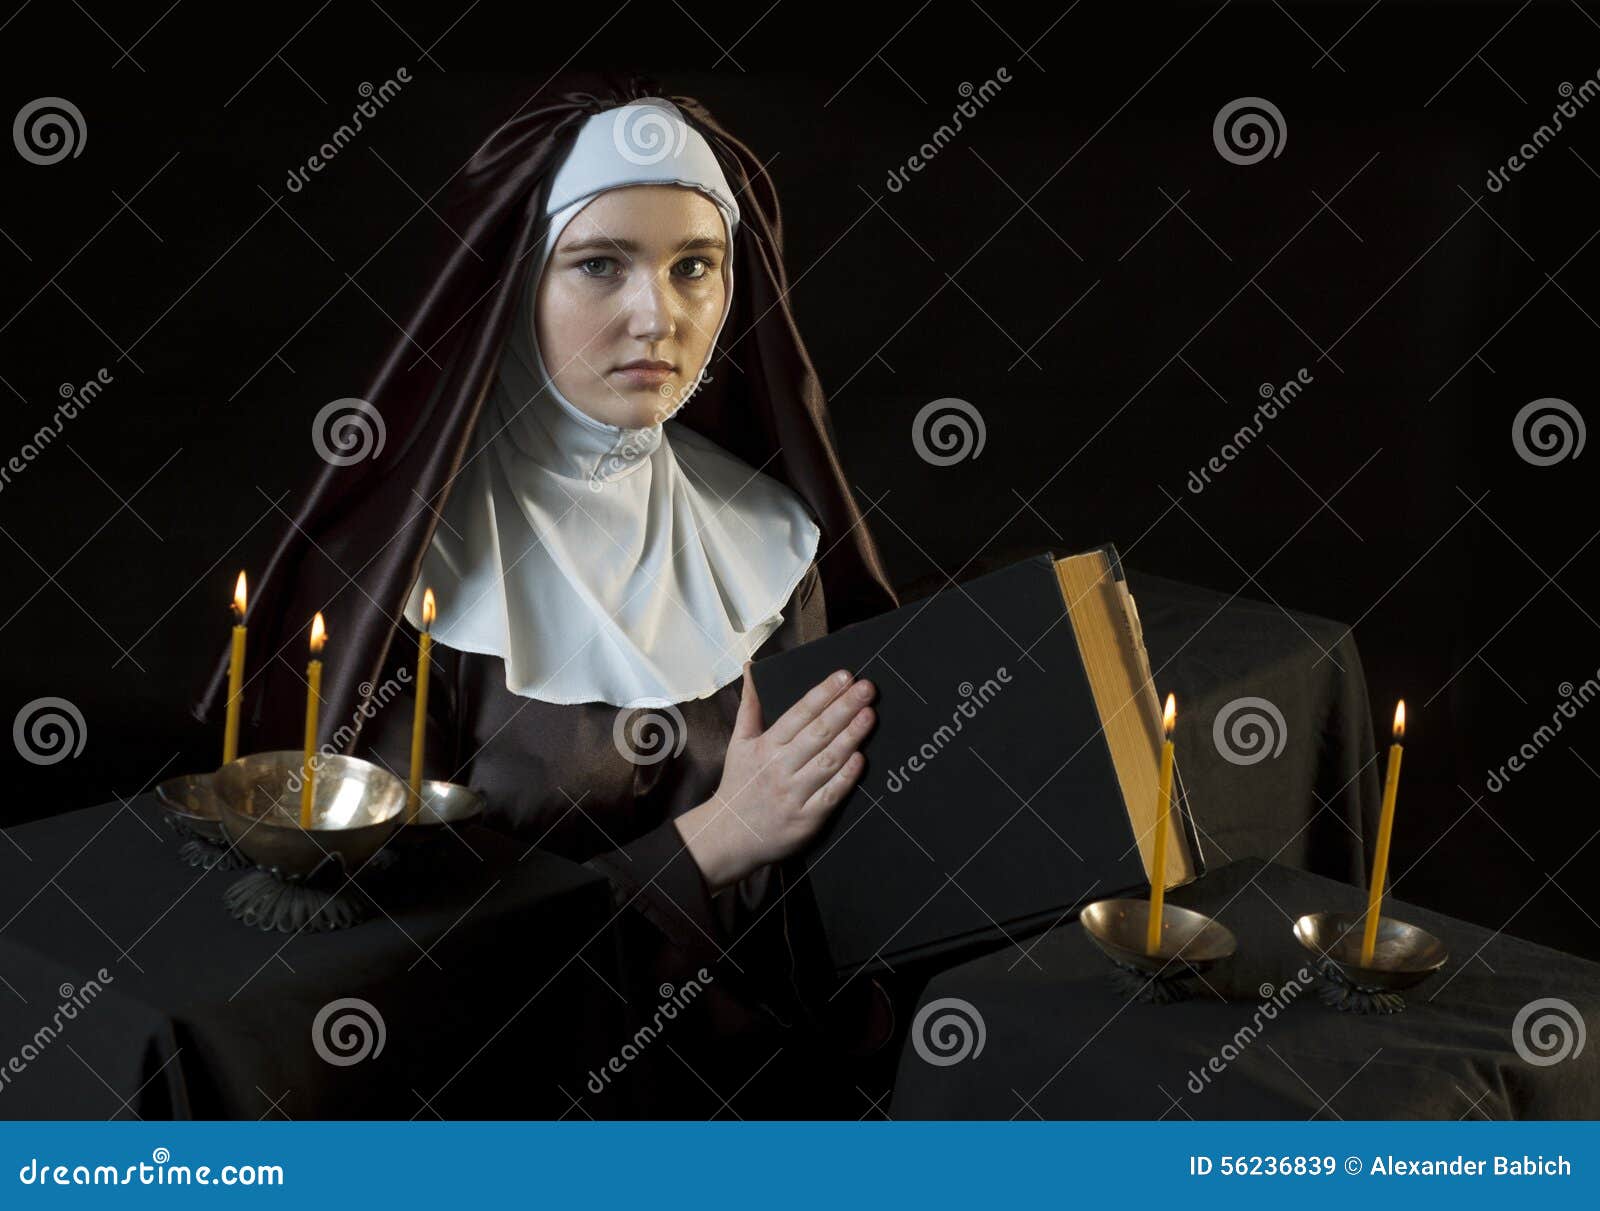 Nun With Bible Stock Photo Image 56236839